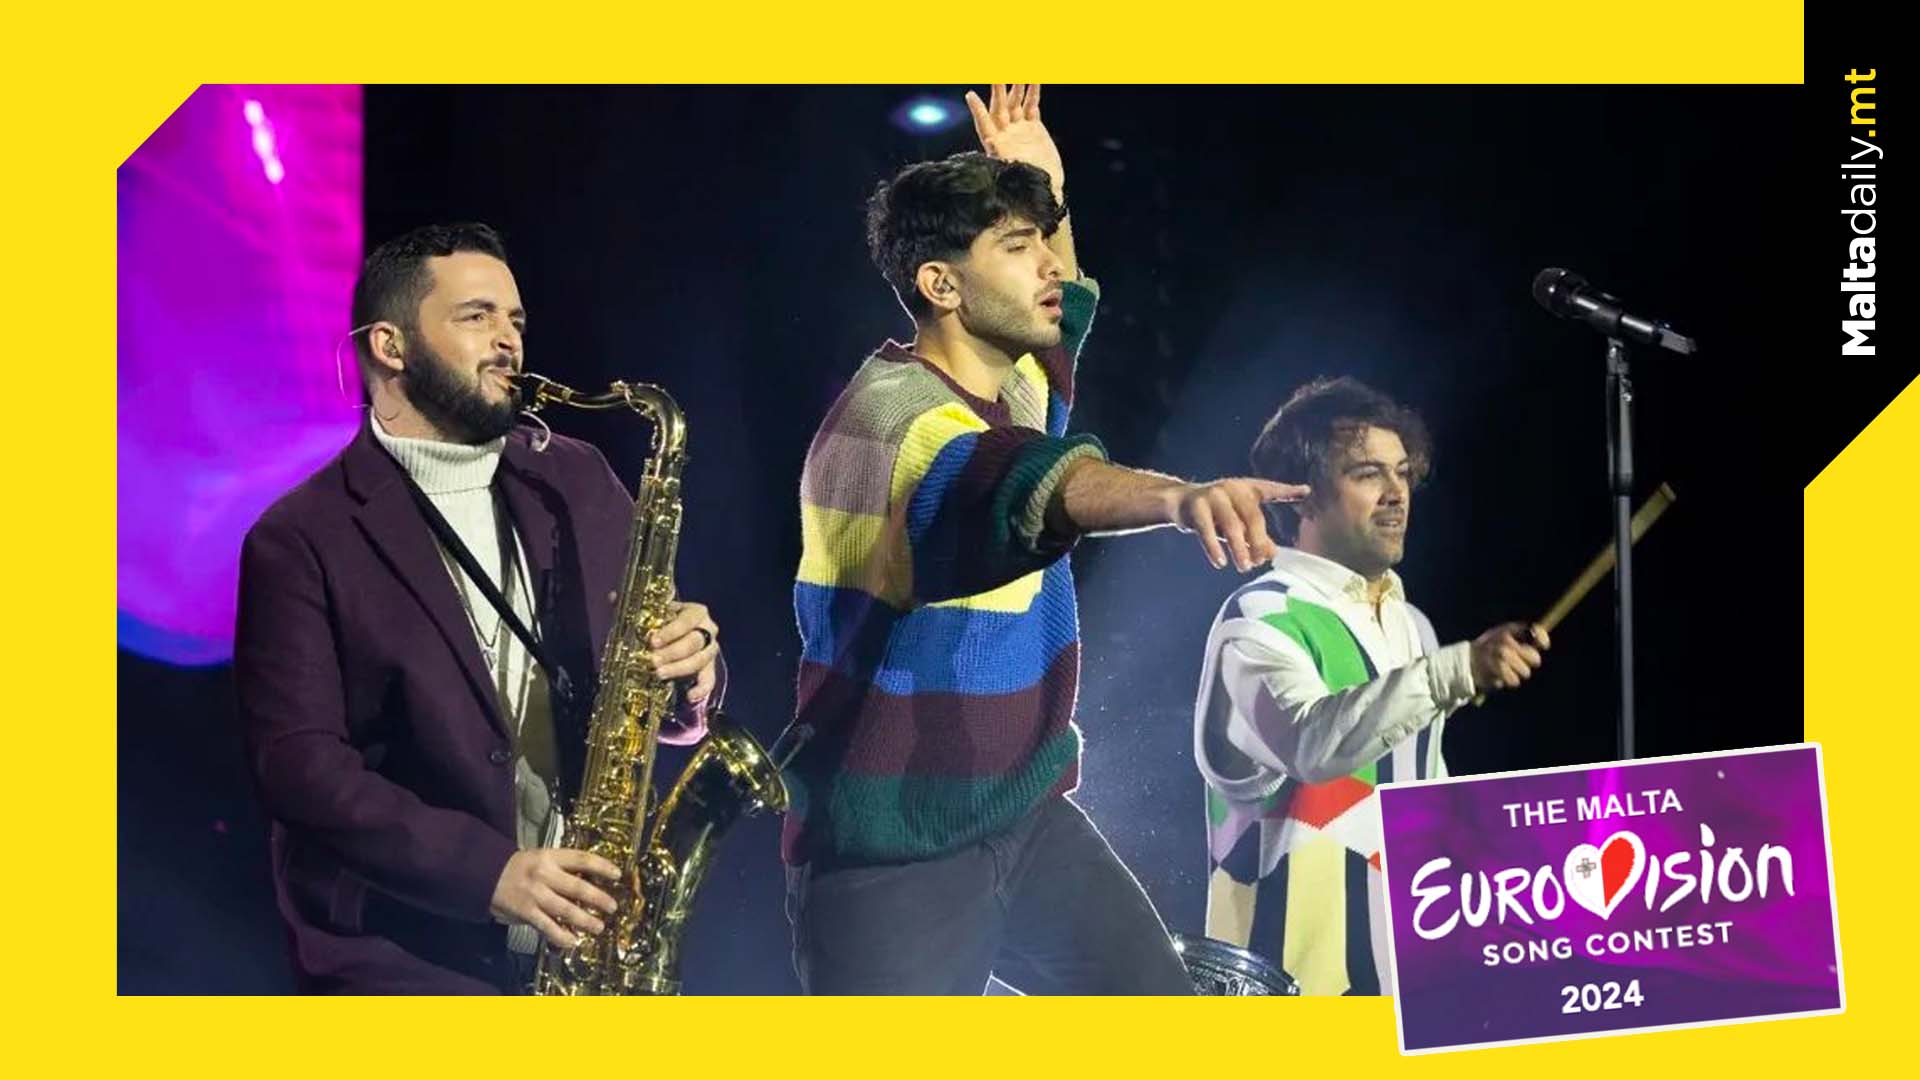 No Live Performance For Malta Eurovision 2024 Final